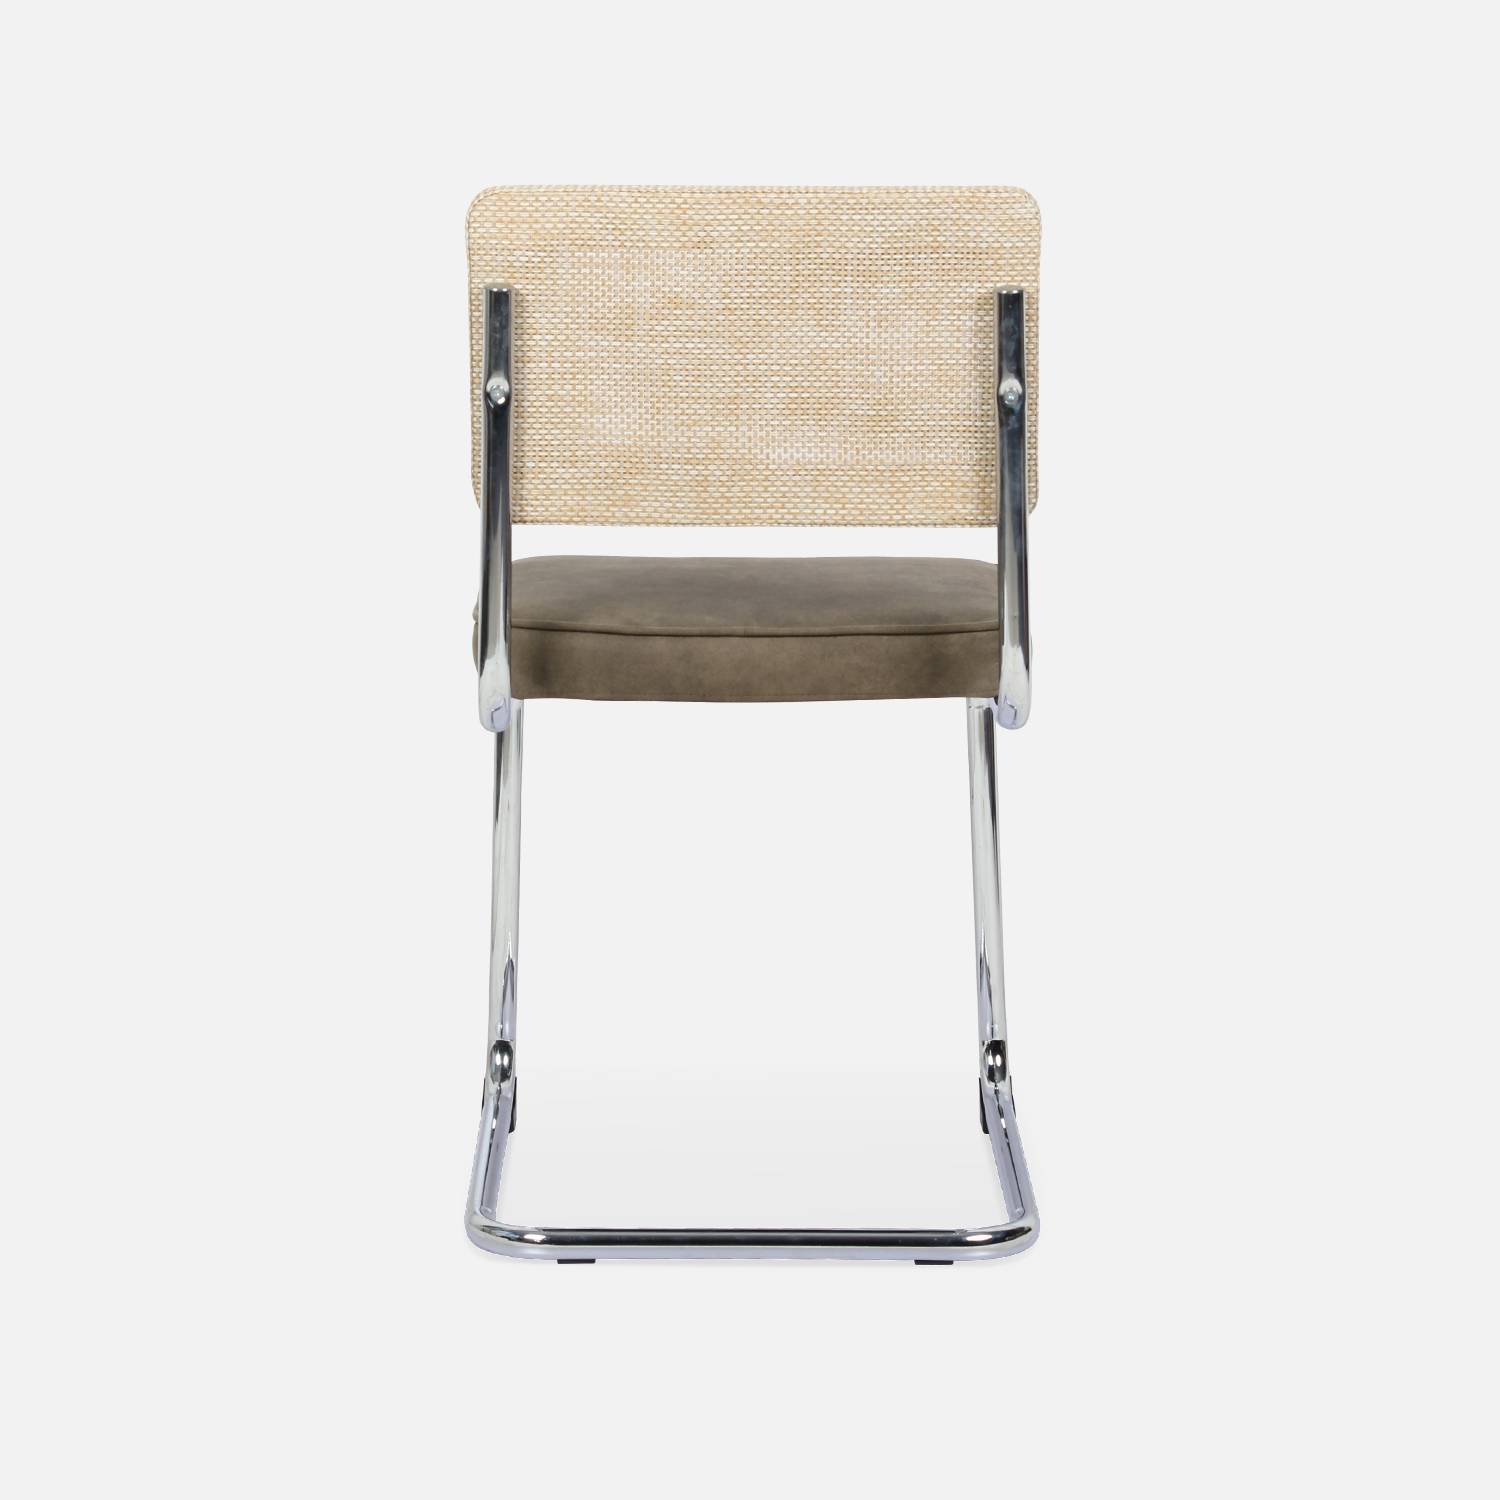 2 sillas cantilever - Maja - tela marrón y resina efecto ratán, 46 x 54,5 x 84,5cm   Photo7